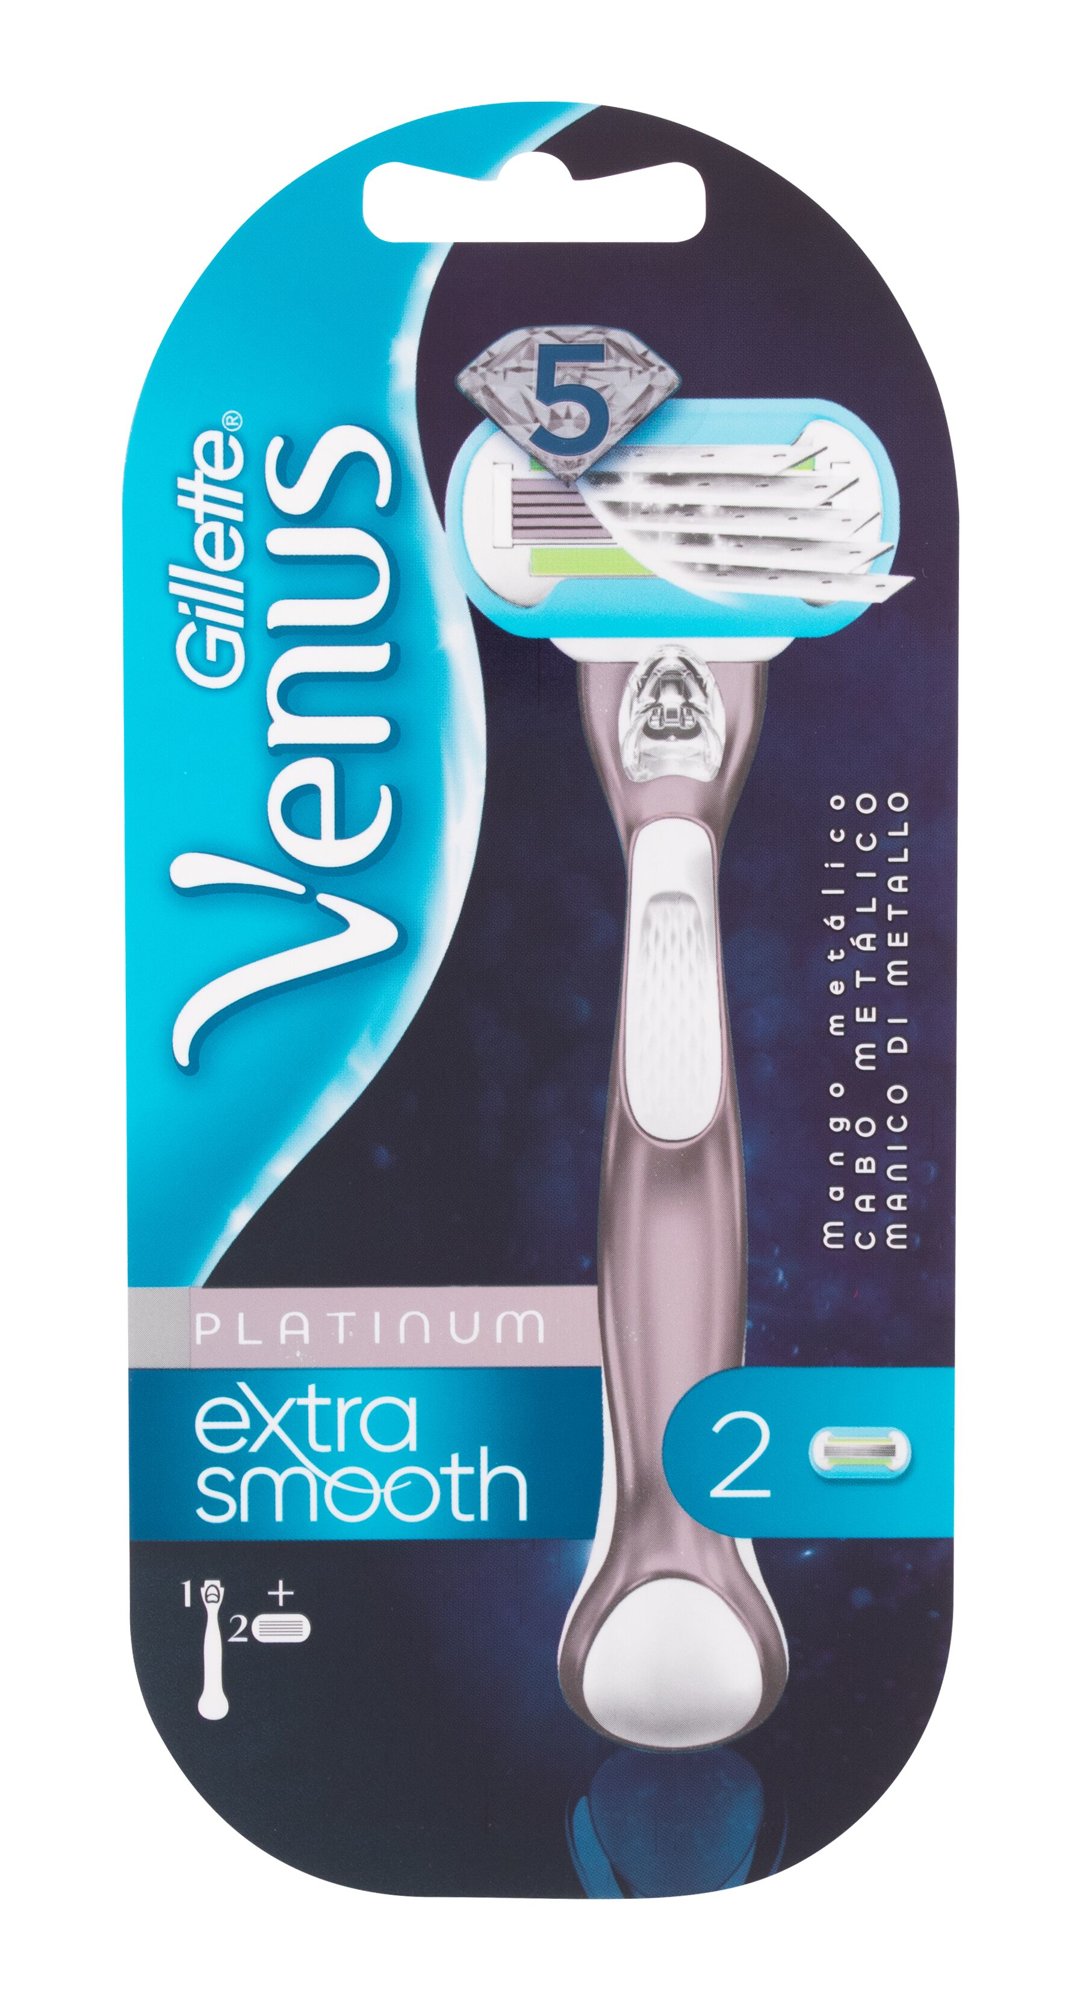 Gillette Venus Extra Smooth Platinum 1vnt skustuvas